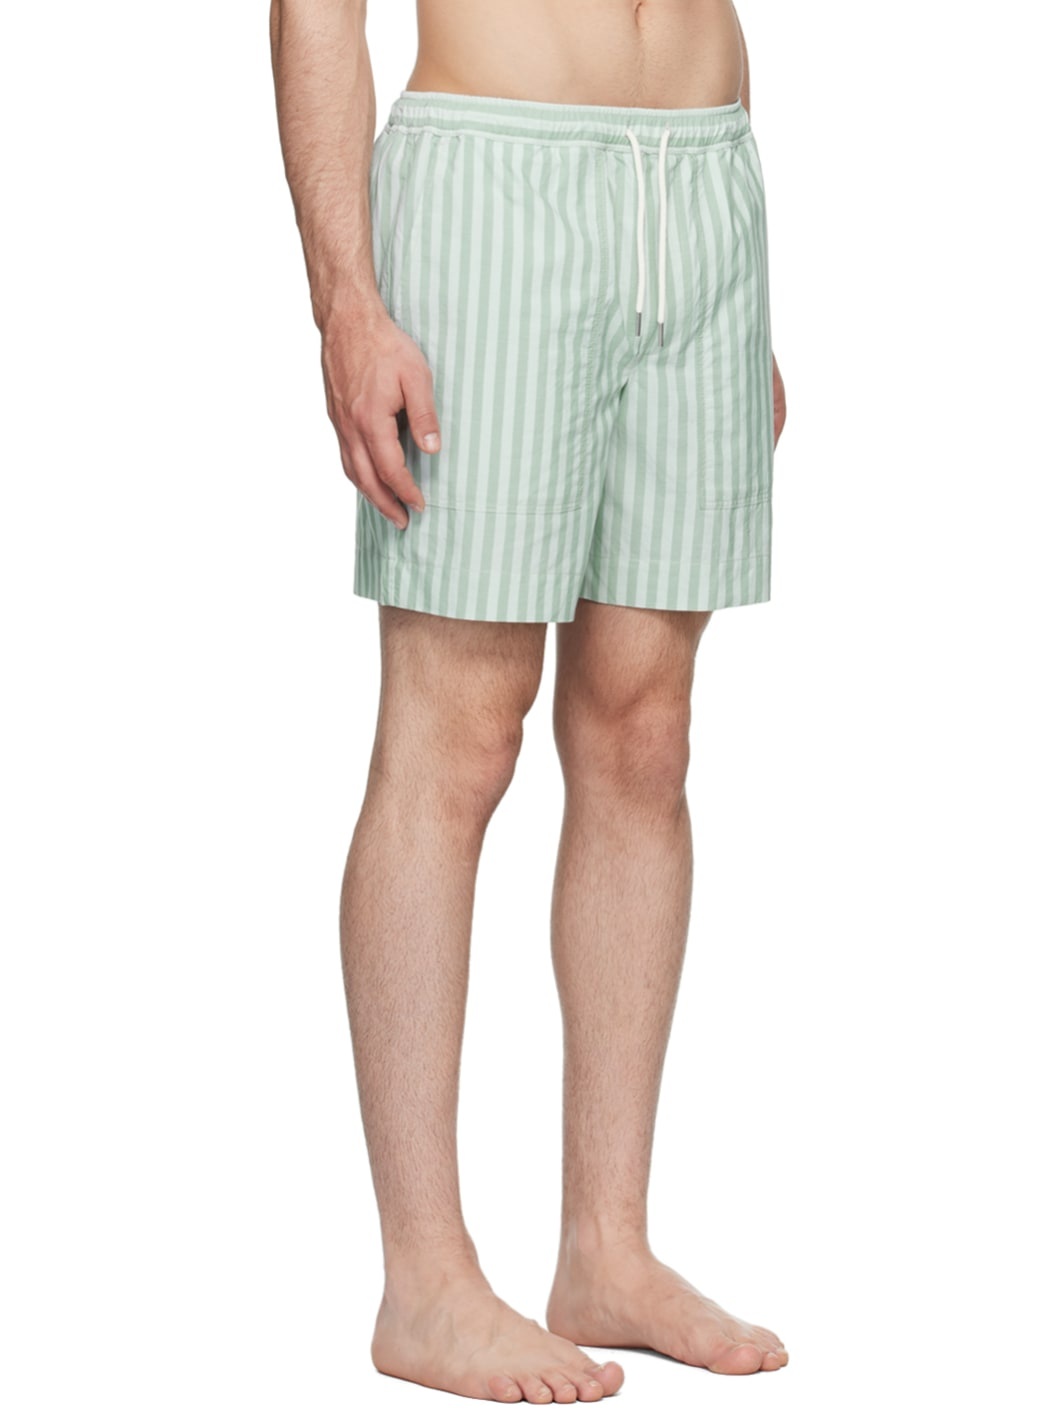 Green Striped Shorts - 2